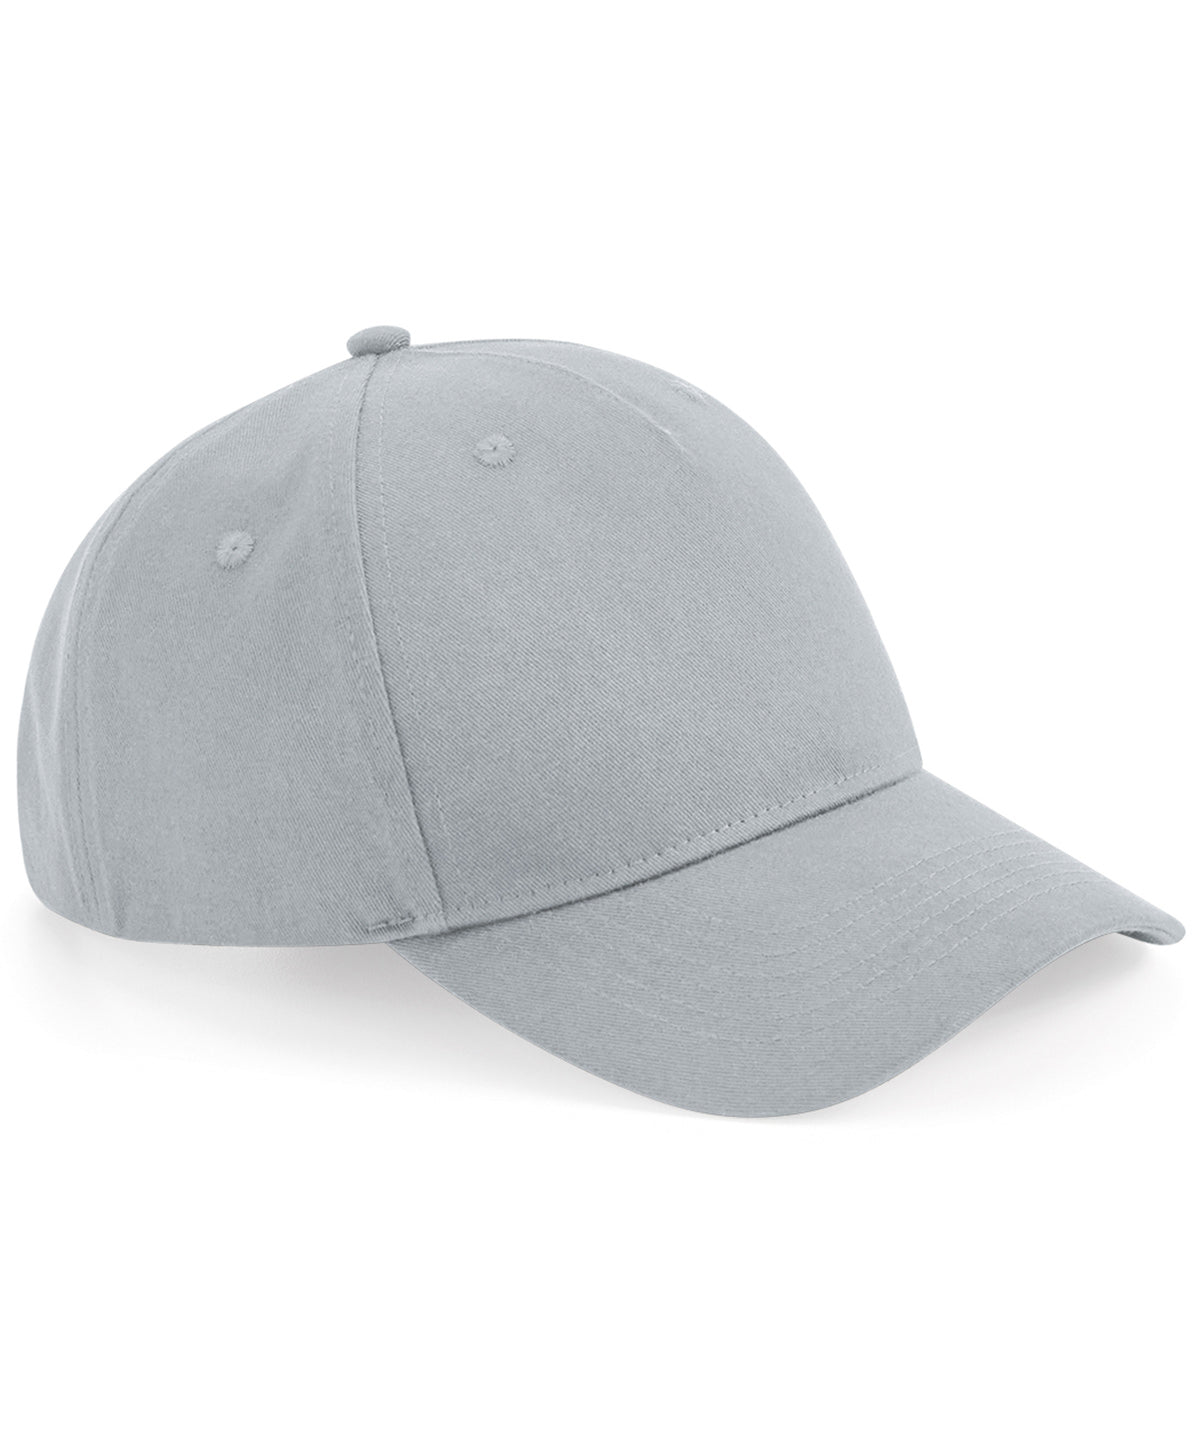 Personalised Caps - Light Grey Beechfield Organic cotton 5-panel cap